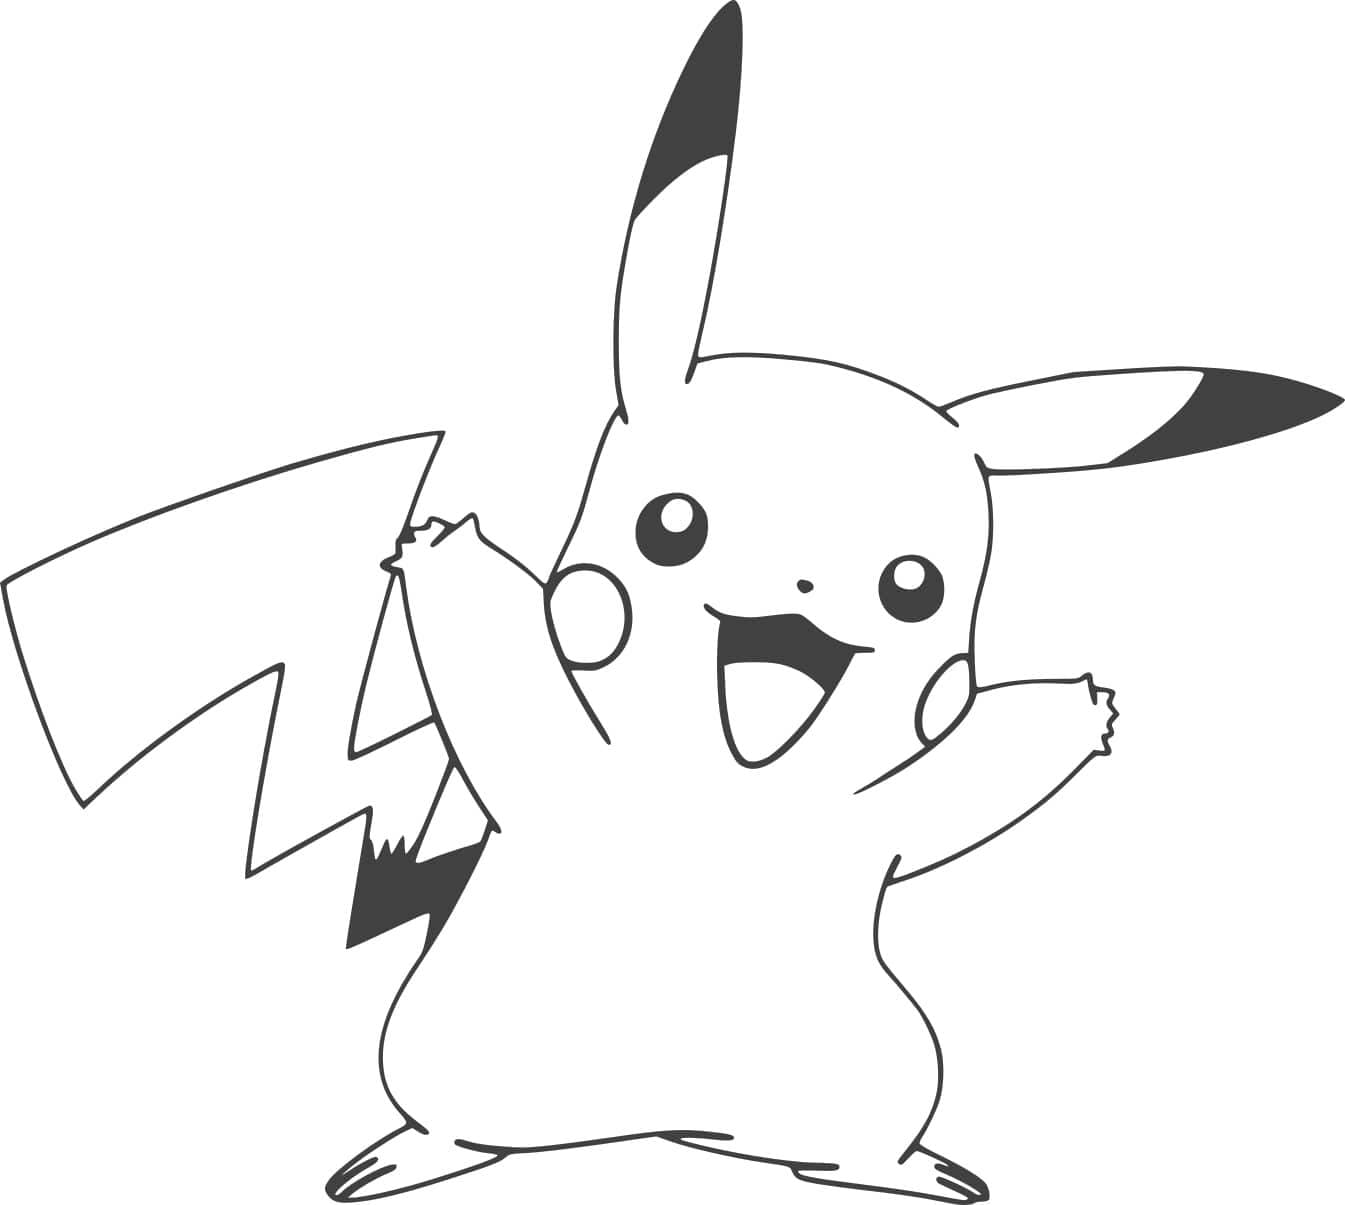 Download Pikachu SVG